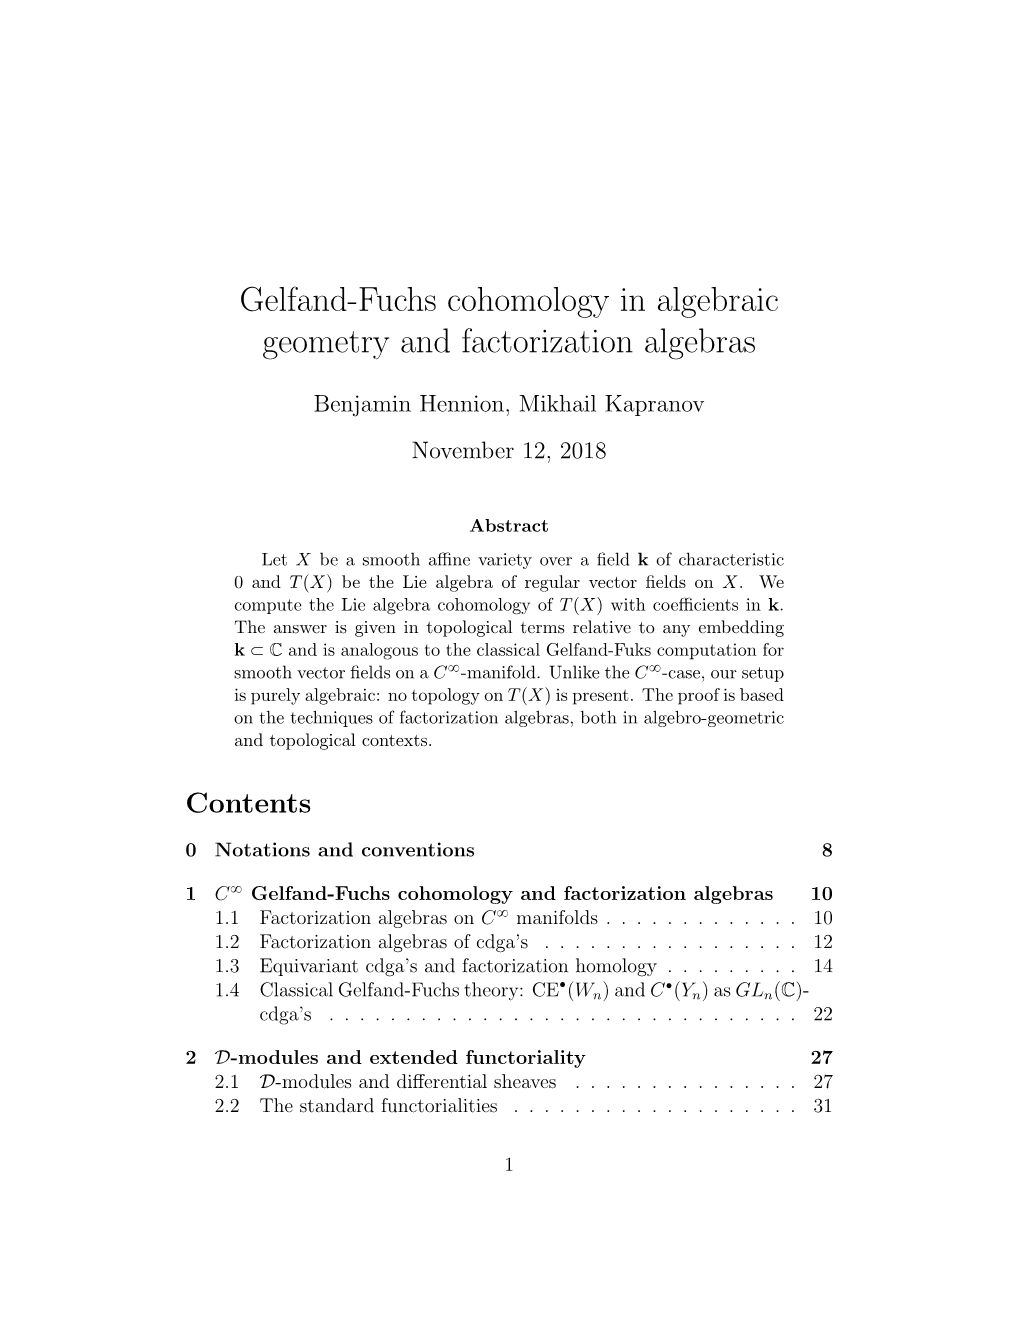 Gelfand-Fuchs Cohomology in Algebraic Geometry and Factorization Algebras